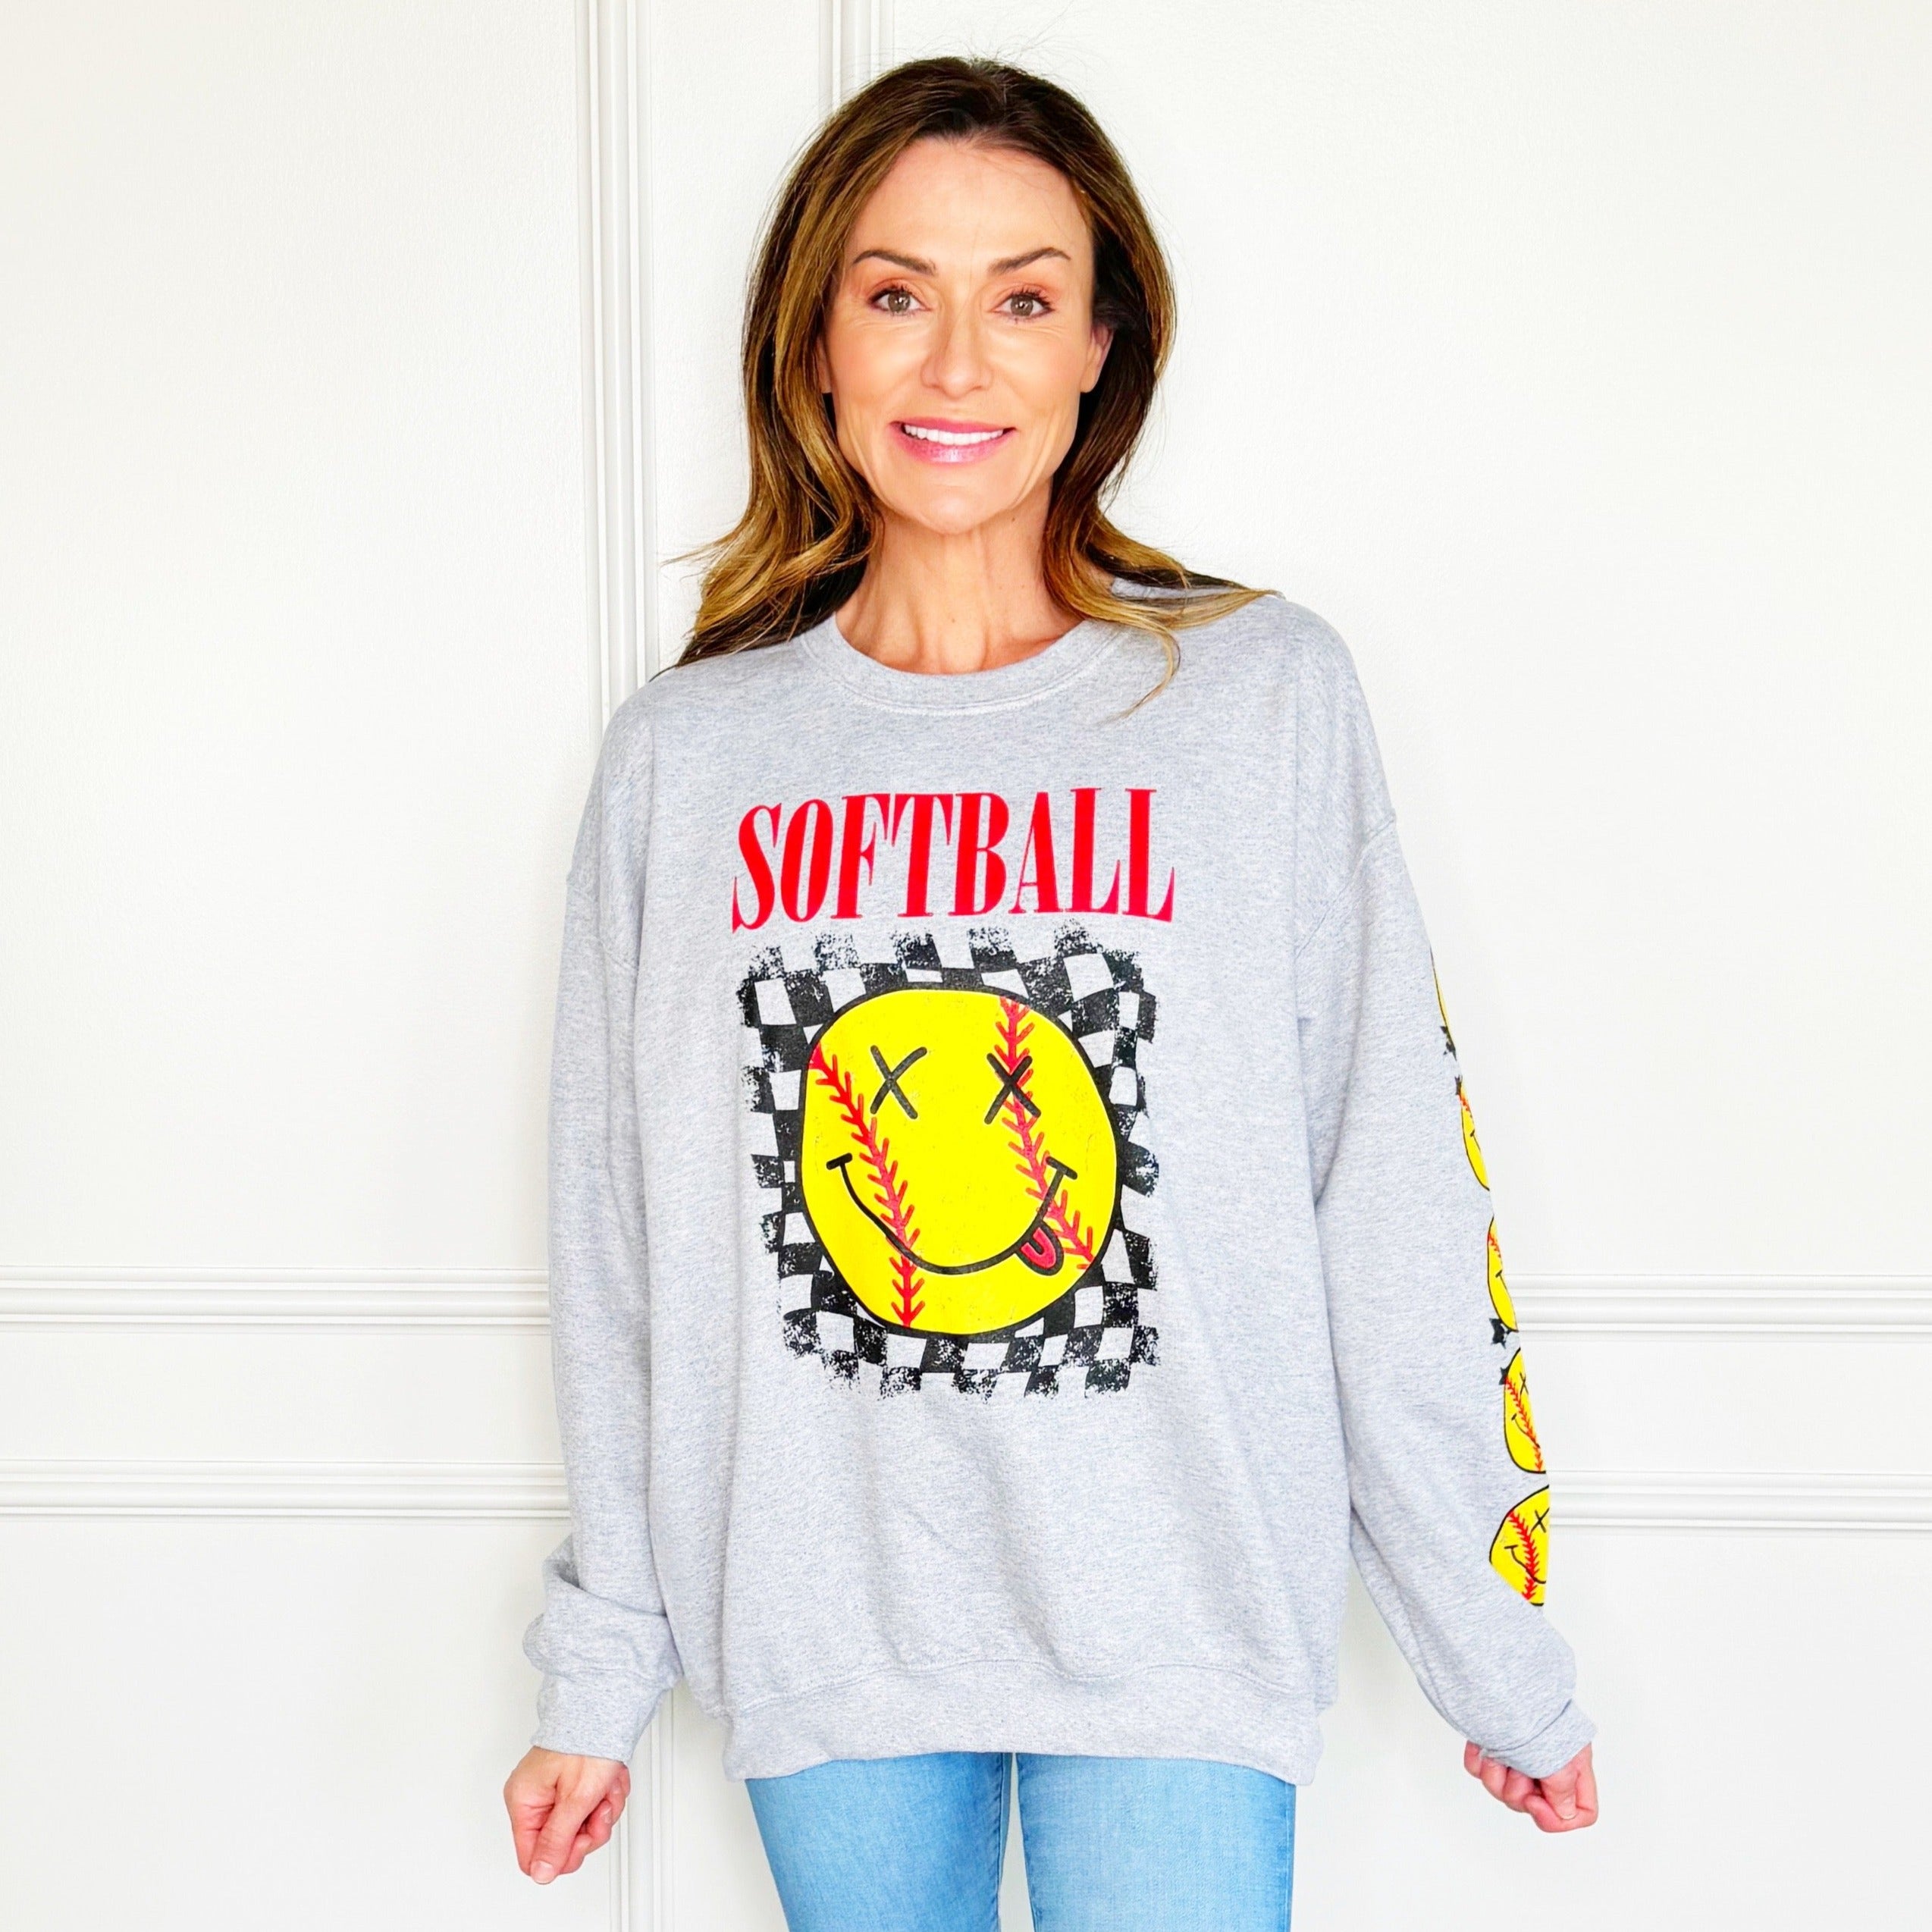 Softball Nirvana Sweatshirt